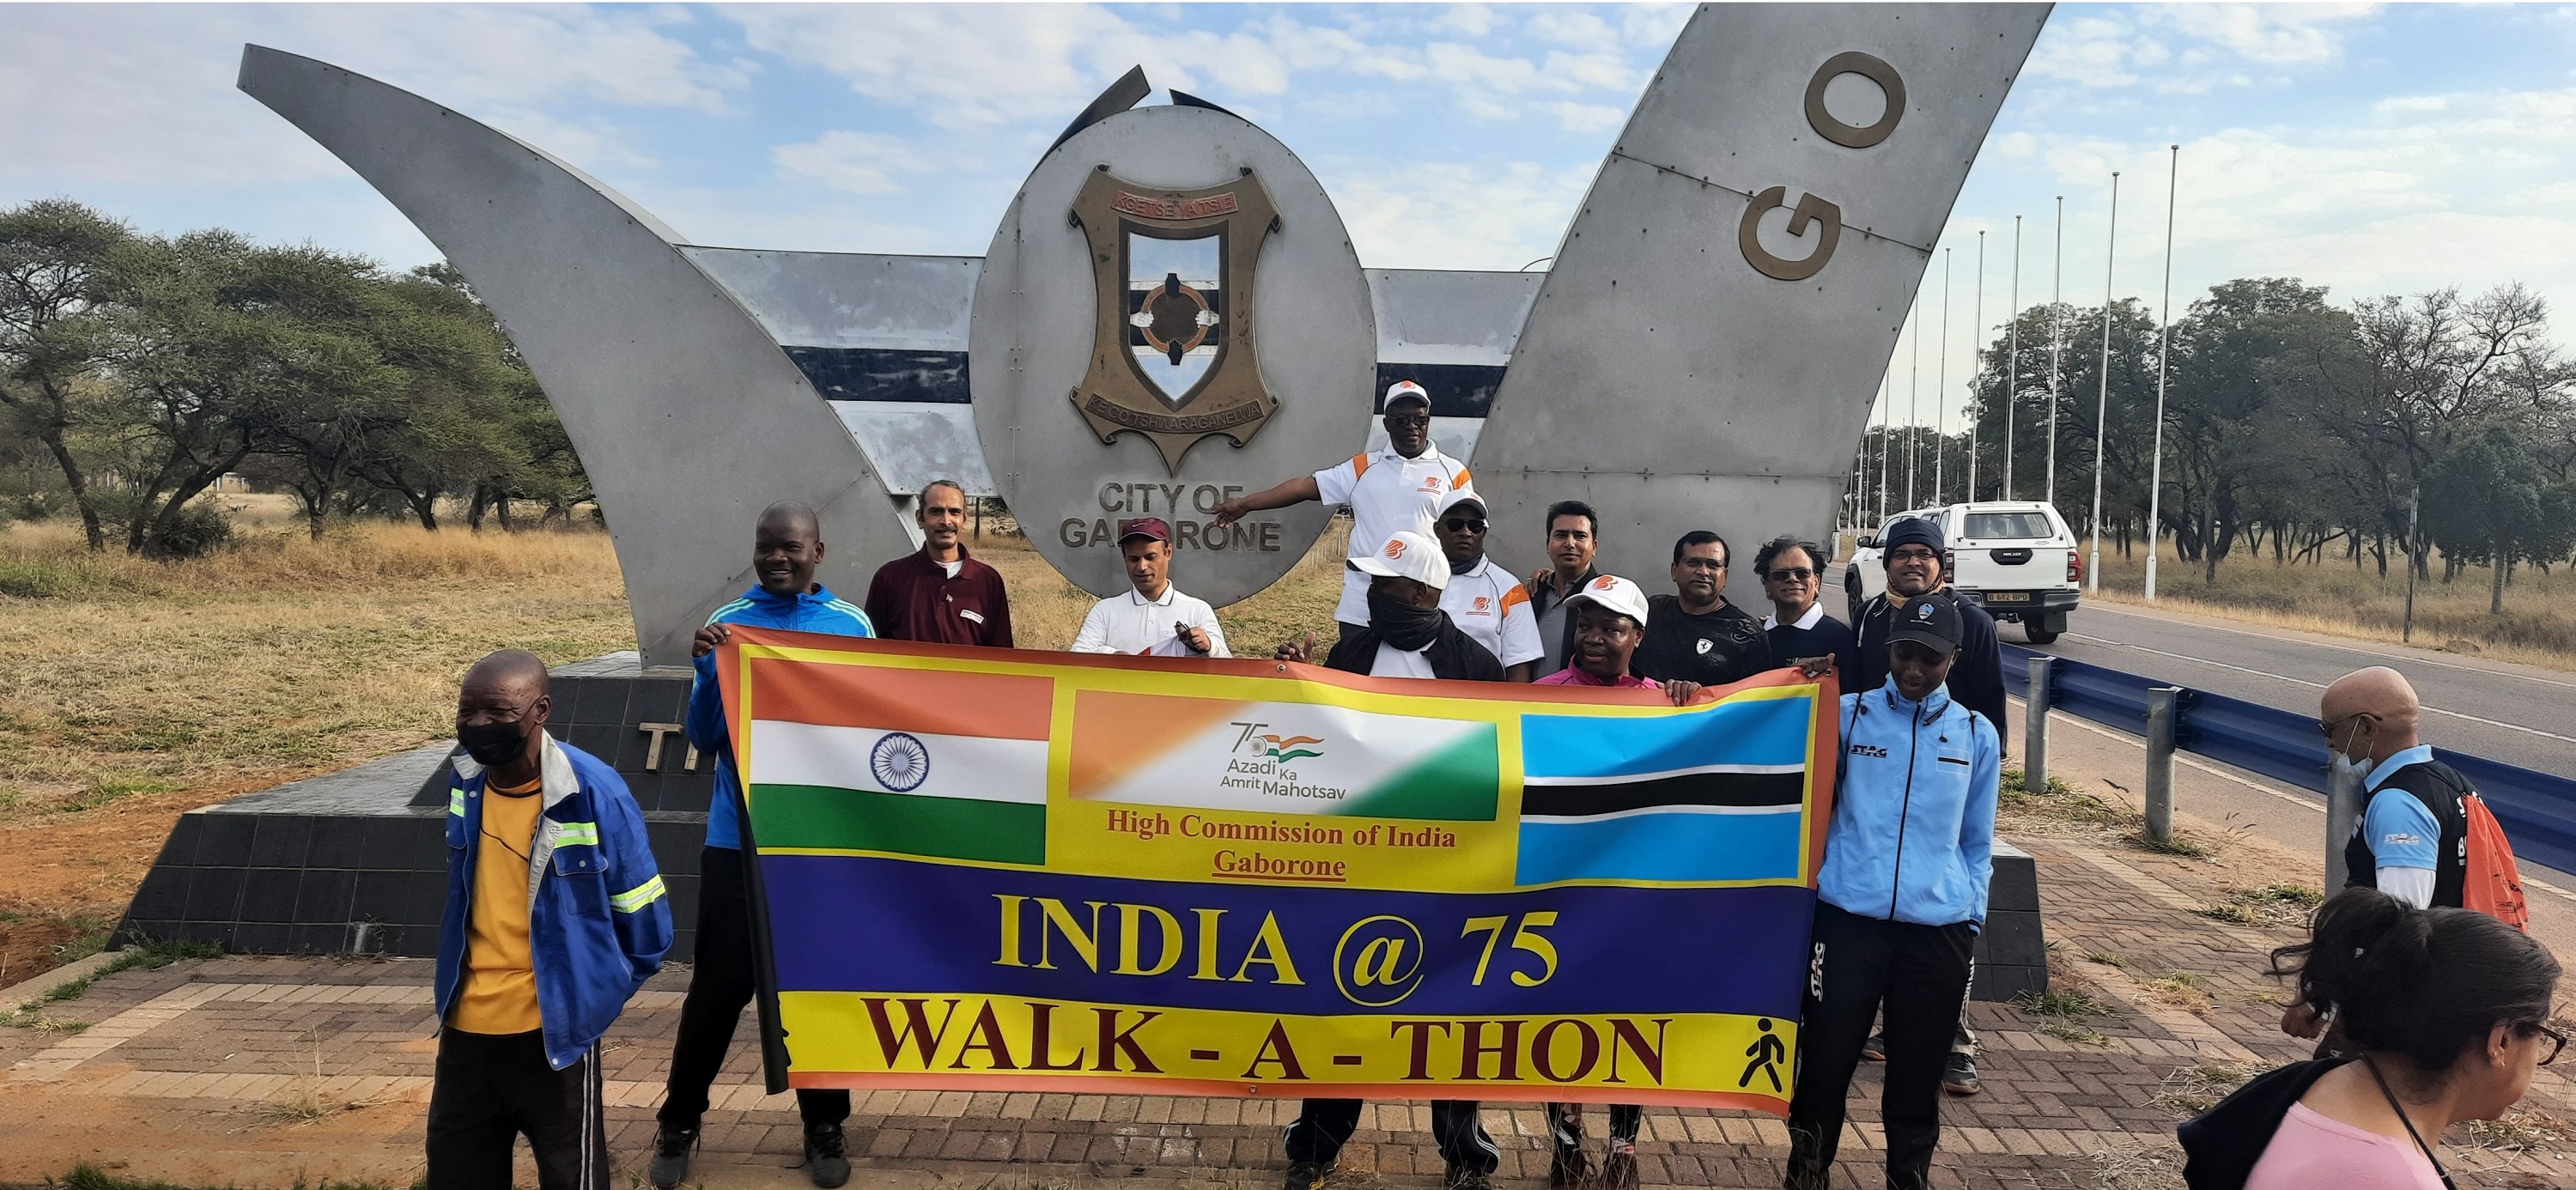 India @ 75 Walk-a-thon